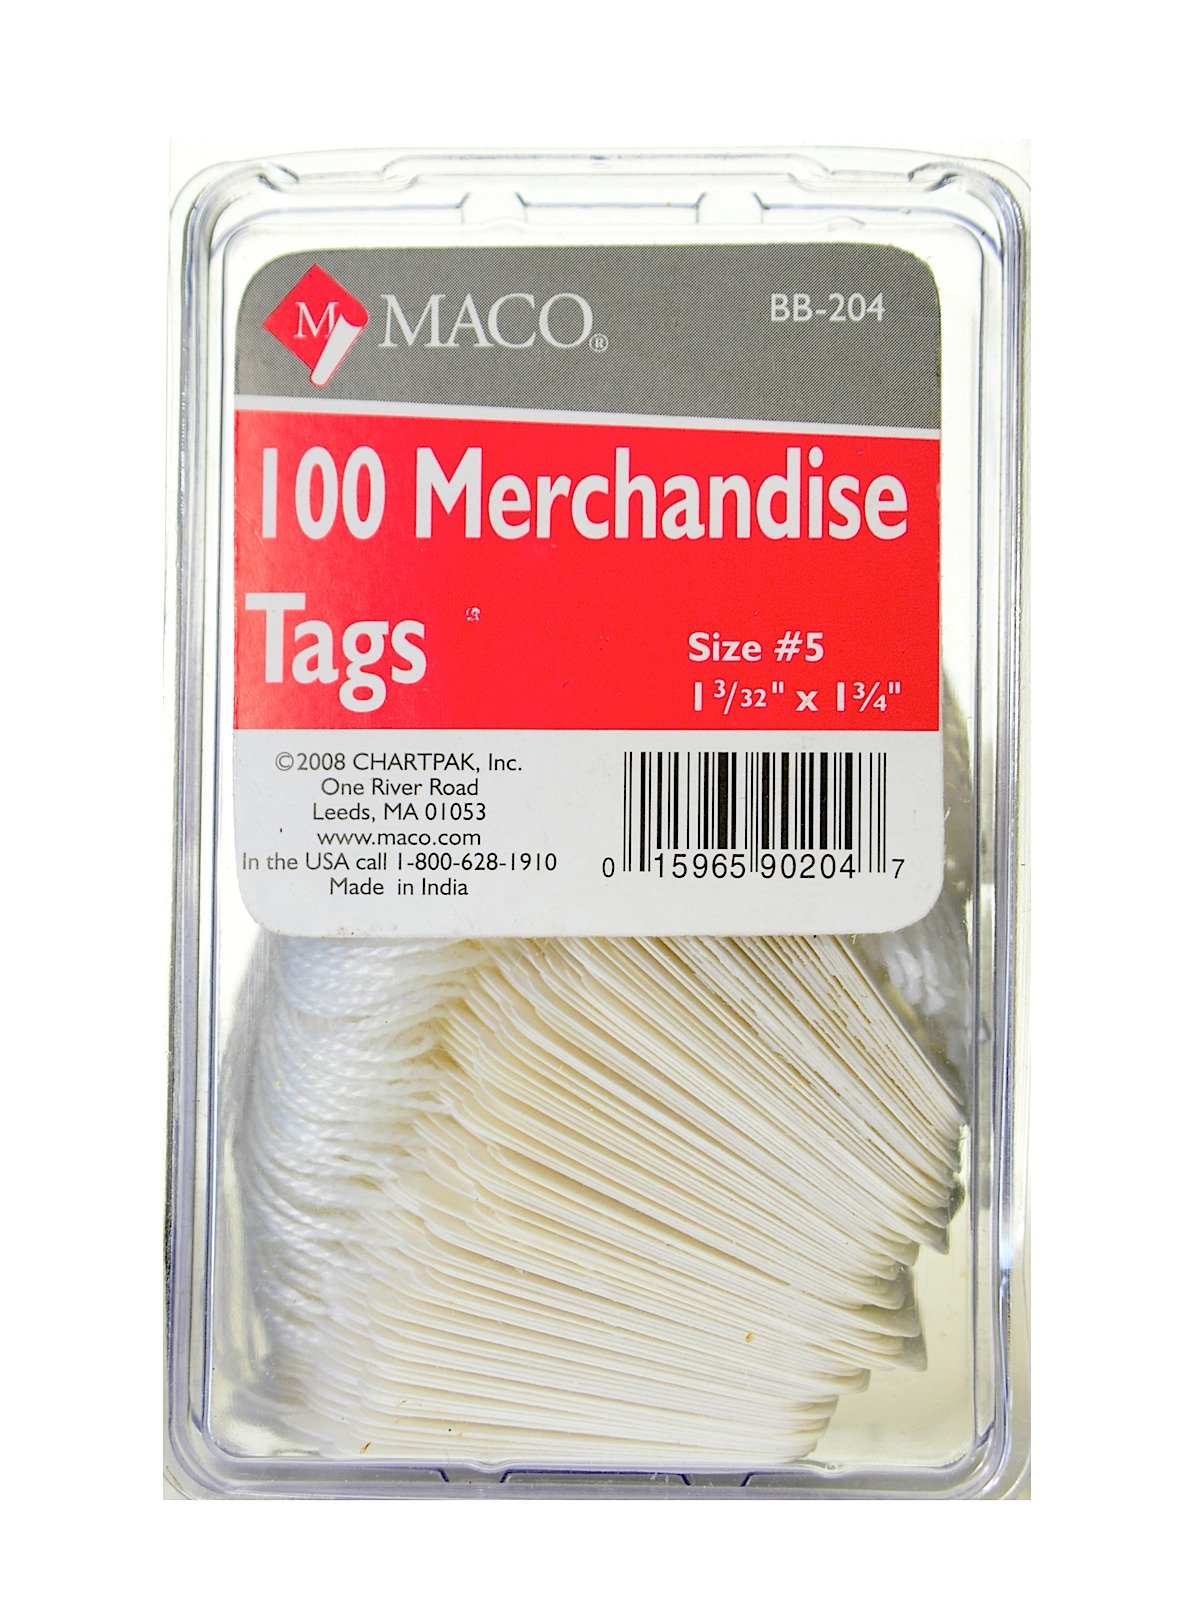 Maco - Merchandise Tags